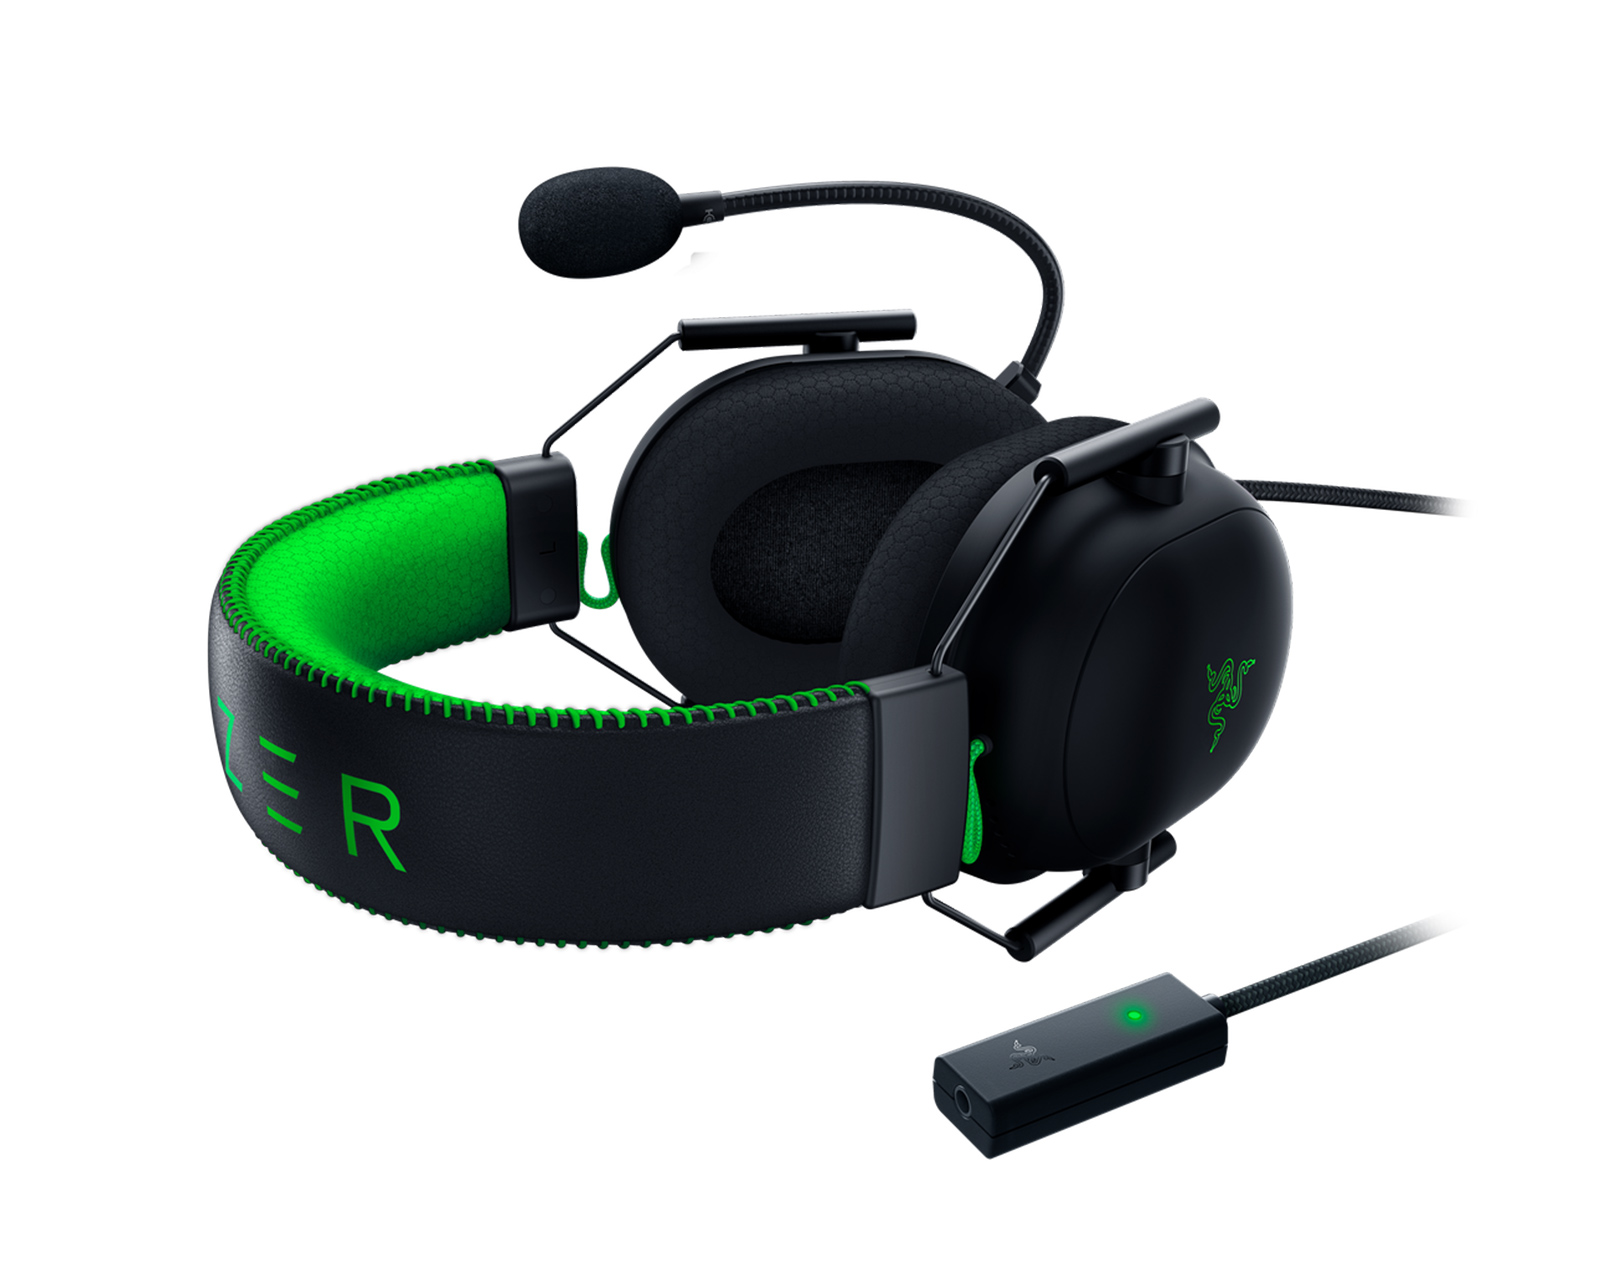 Razer Blackshark V2 SE Multi-Platform Gaming Headset 